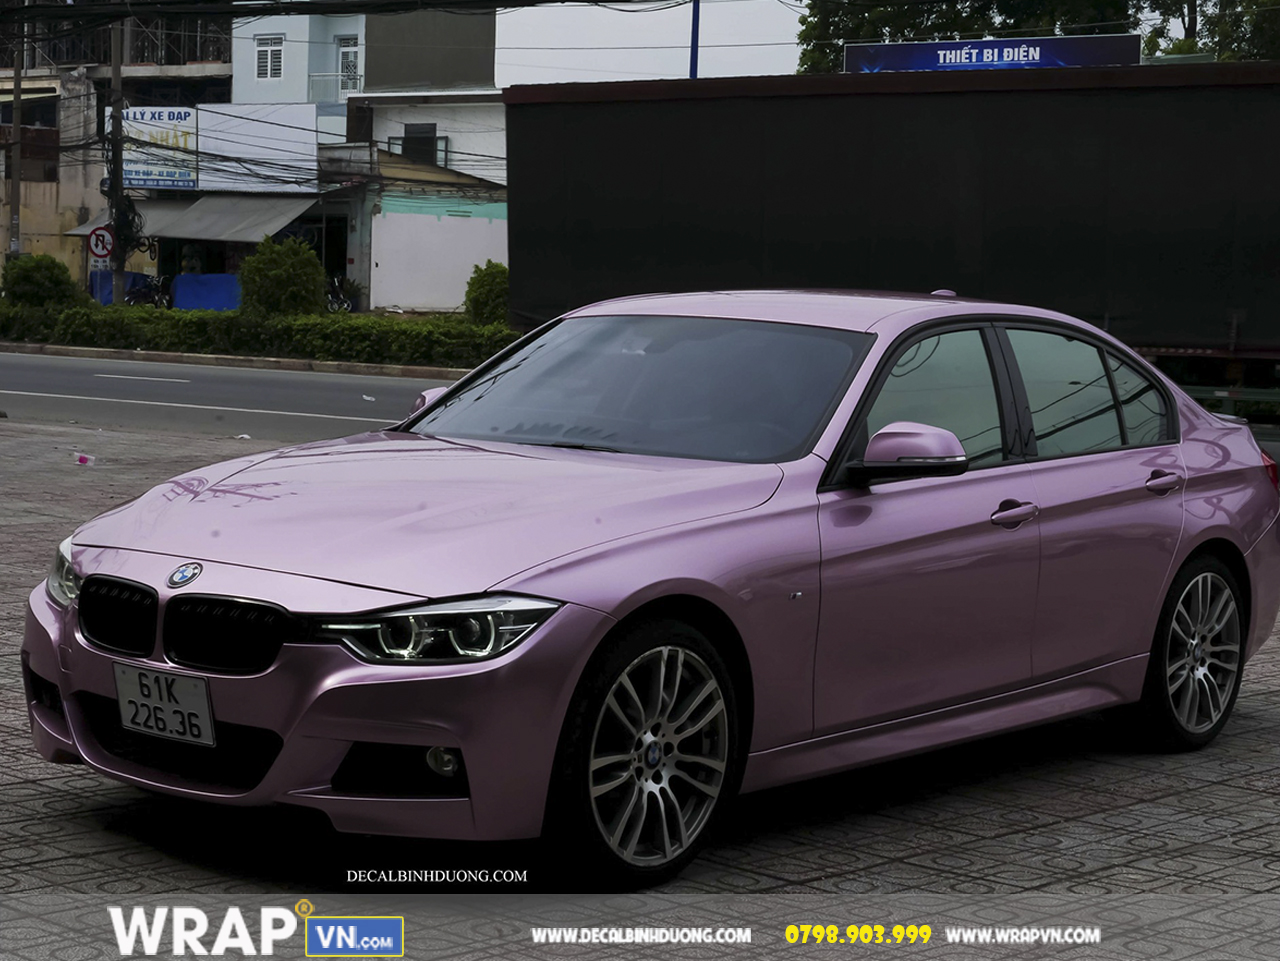 wrap-full-BMW- Passion Pink -cuon-hut-